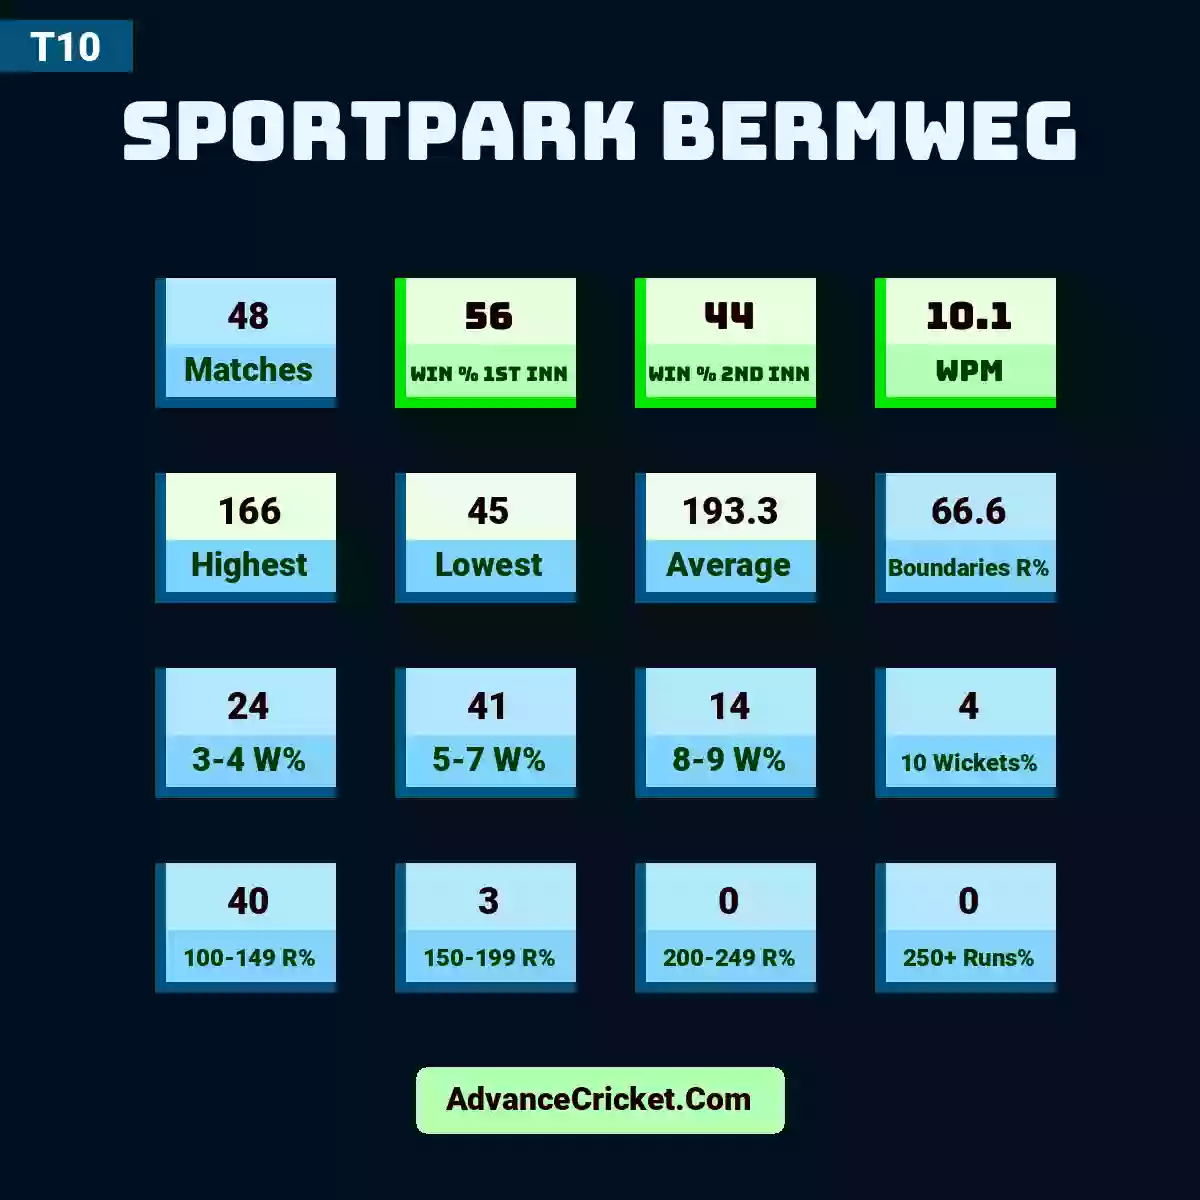 Image showing Sportpark Bermweg with Matches: 48, Win % 1st Inn: 56, Win % 2nd Inn: 44, WPM: 10.1, Highest: 166, Lowest: 45, Average: 193.3, Boundaries R%: 66.6, 3-4 W%: 24, 5-7 W%: 41, 8-9 W%: 14, 10 Wickets%: 4, 100-149 R%: 40, 150-199 R%: 3, 200-249 R%: 0, 250+ Runs%: 0.